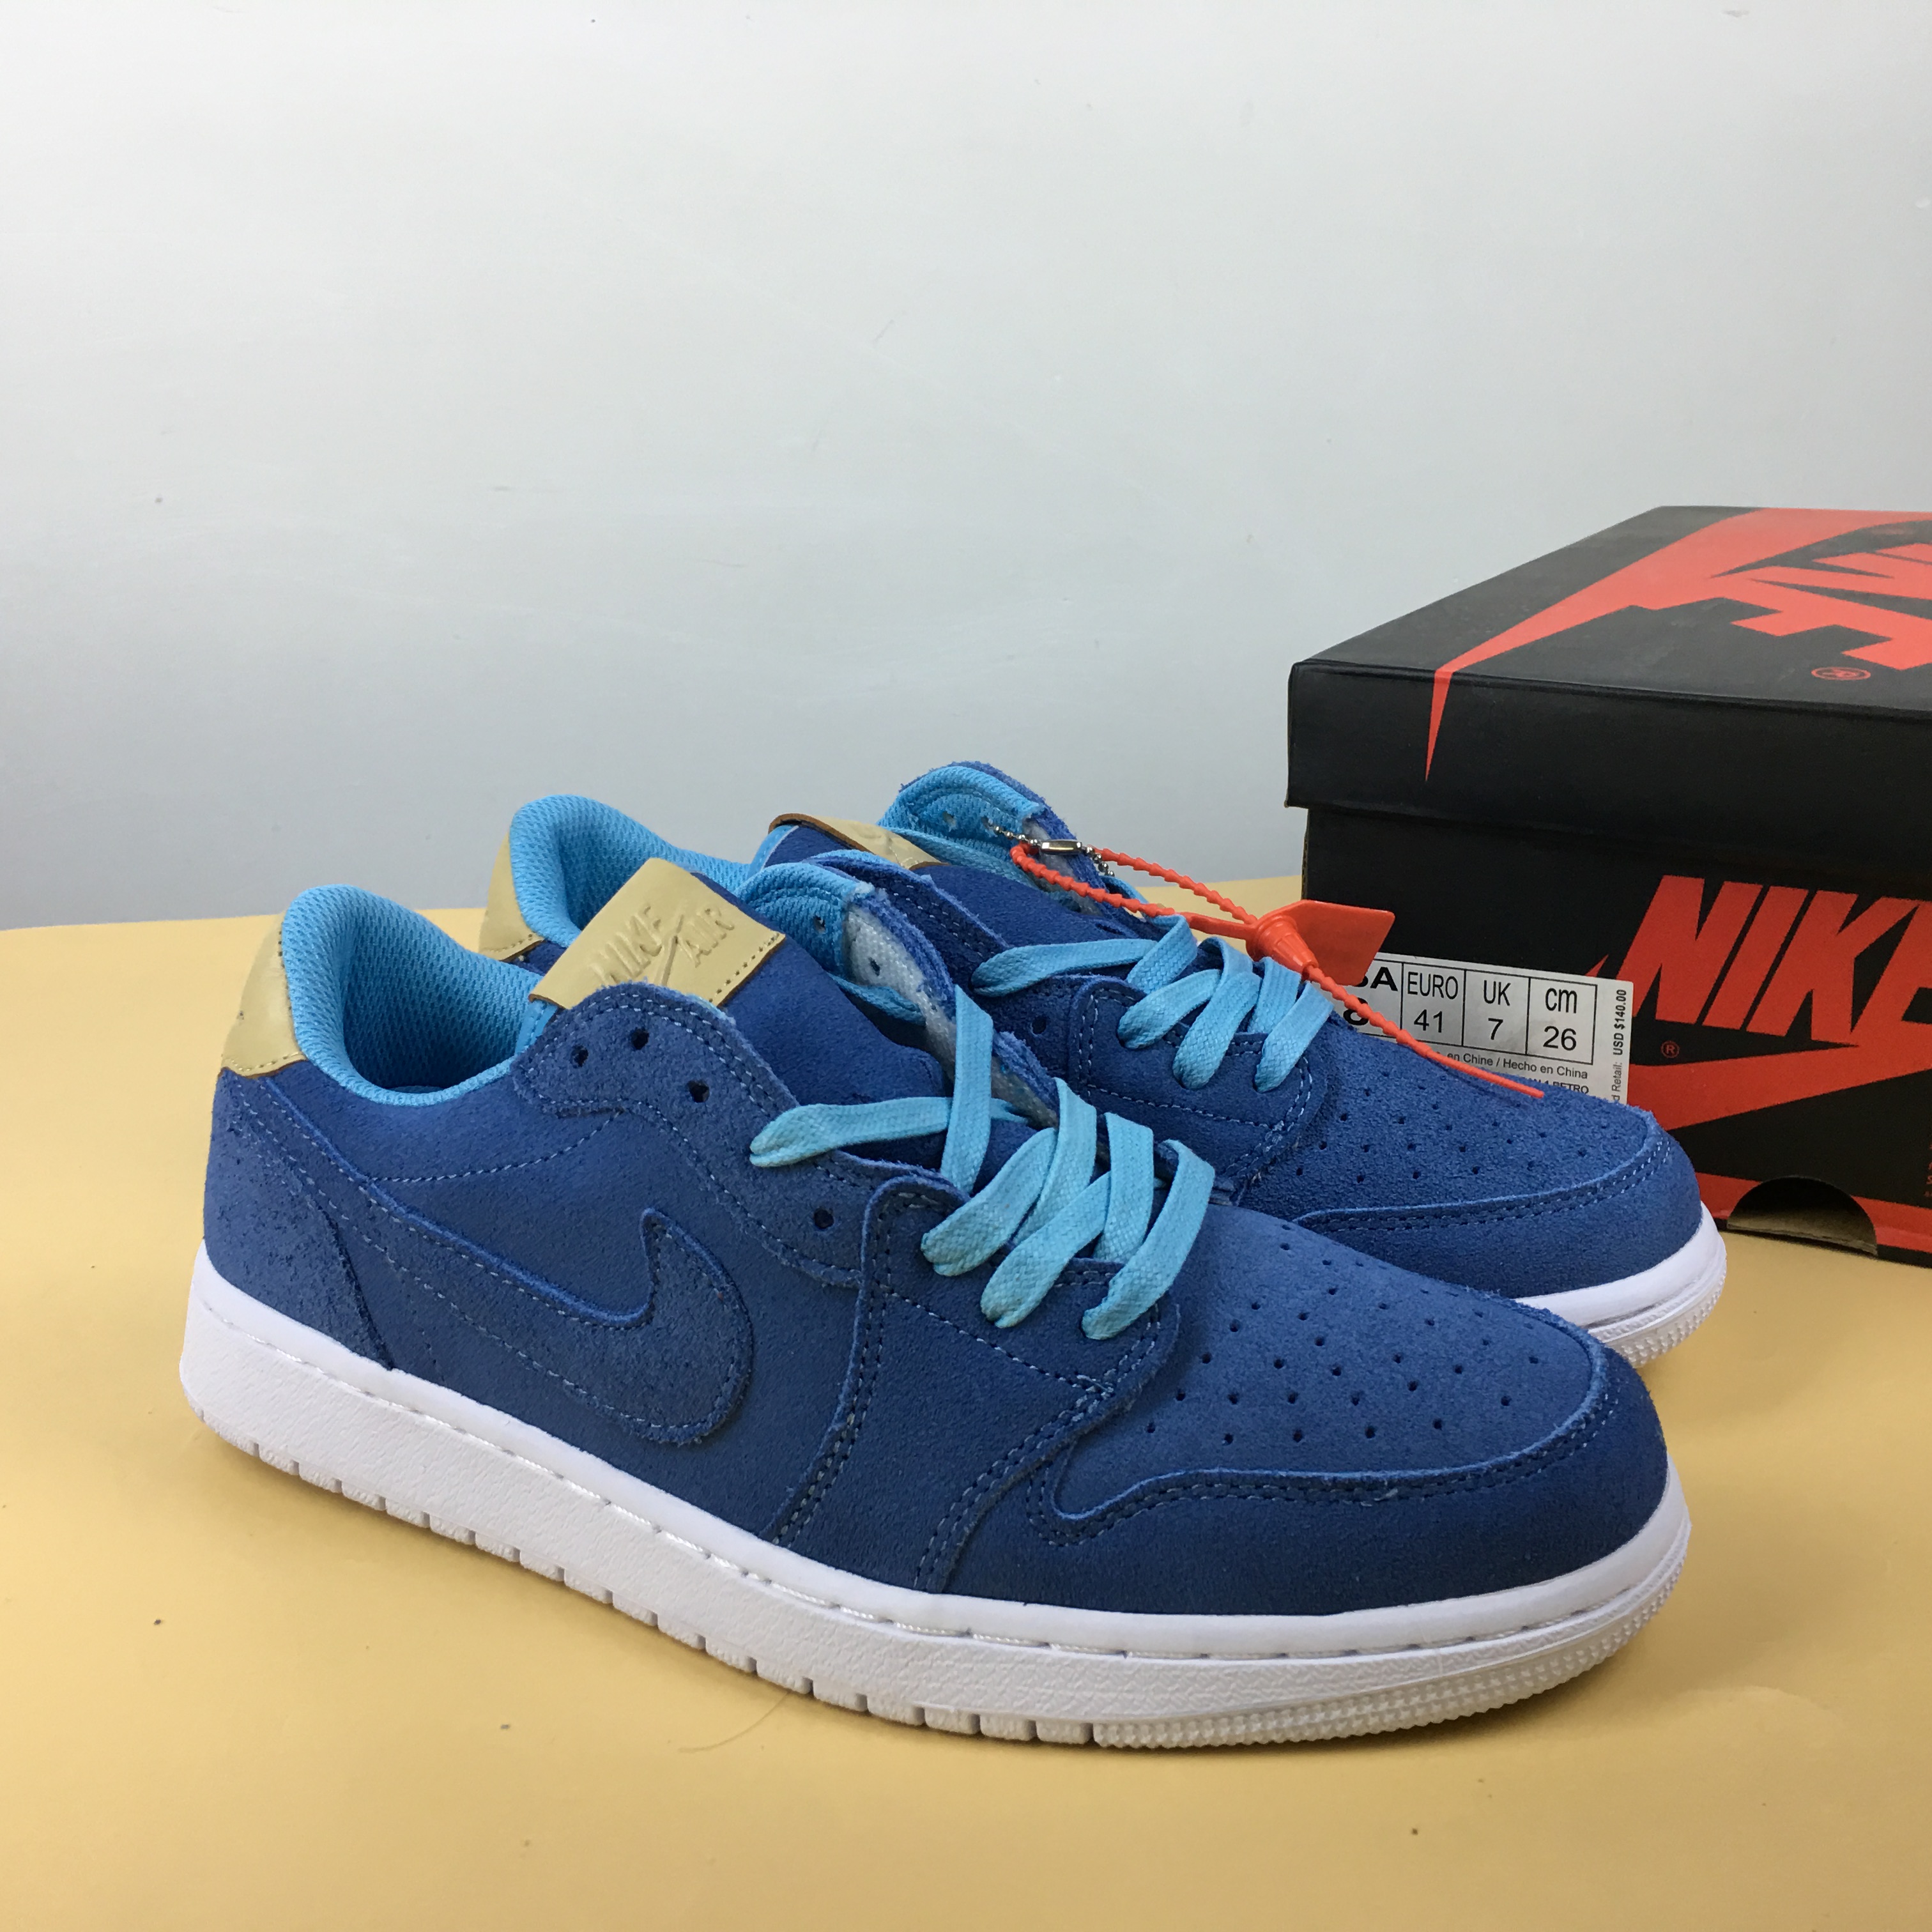 Air Jordan 1 Low “Tan” PRM Blue Shoes